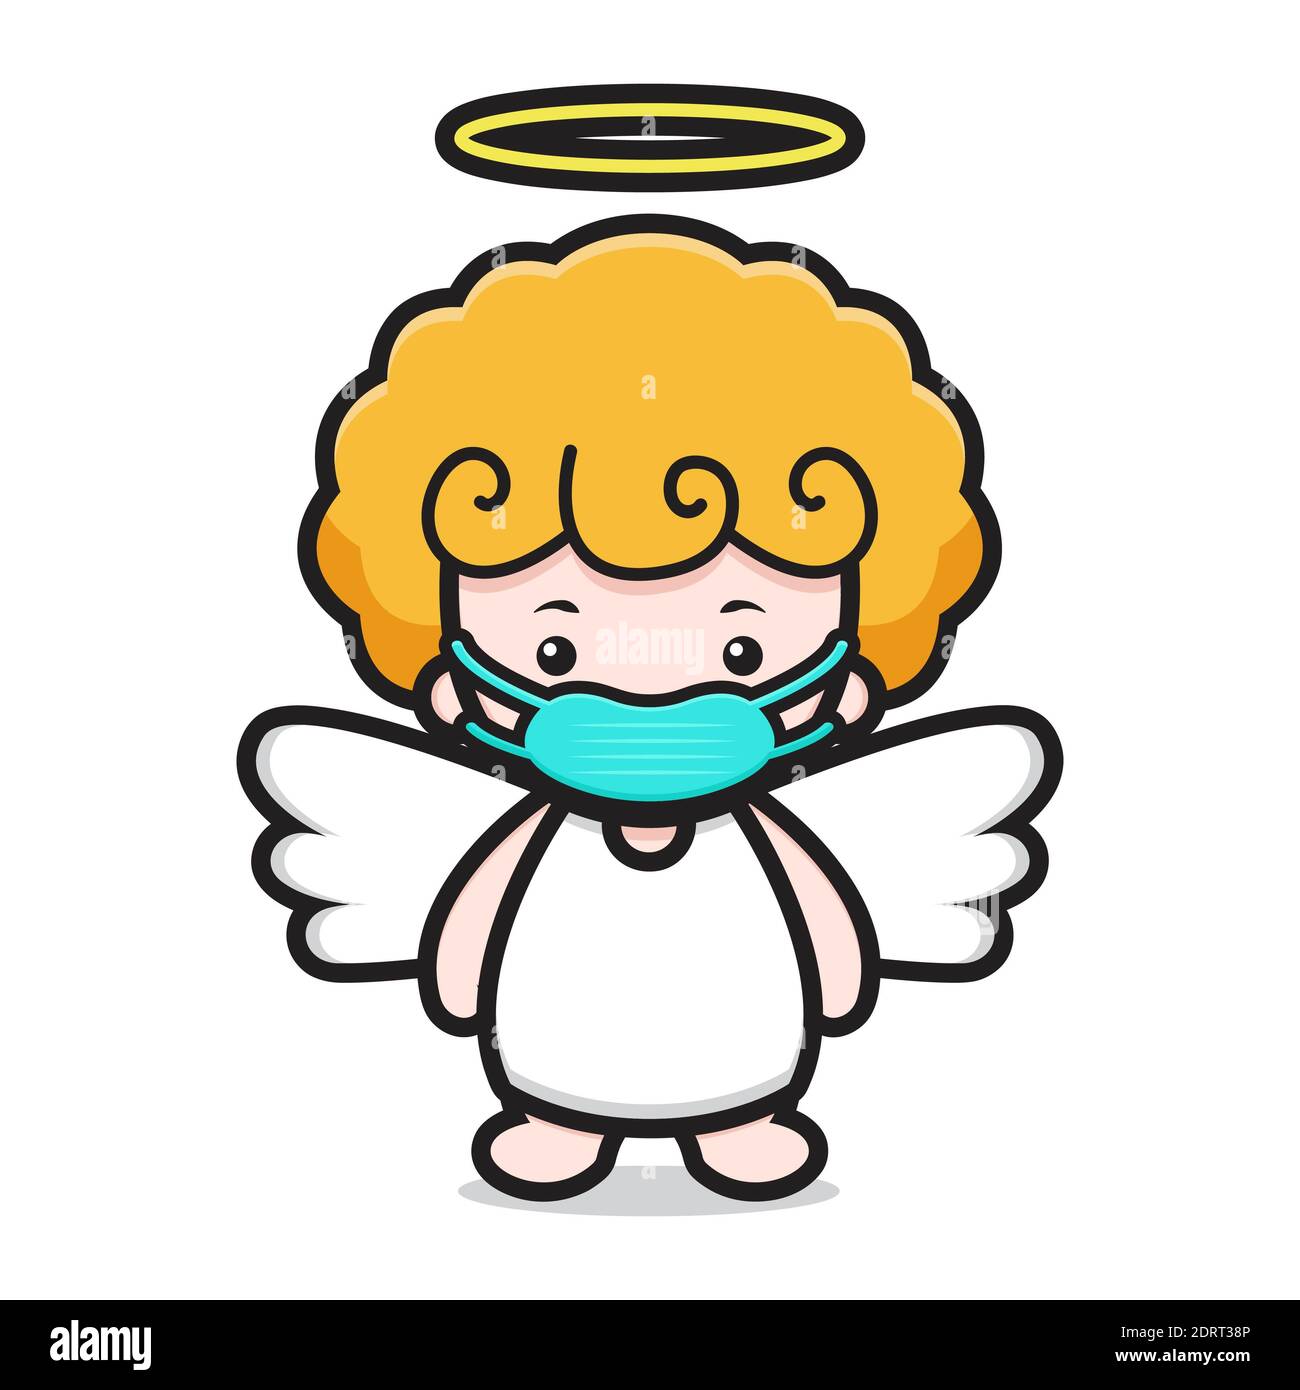 cute angel cartoon character wearing mask Stock Photo - Alamy